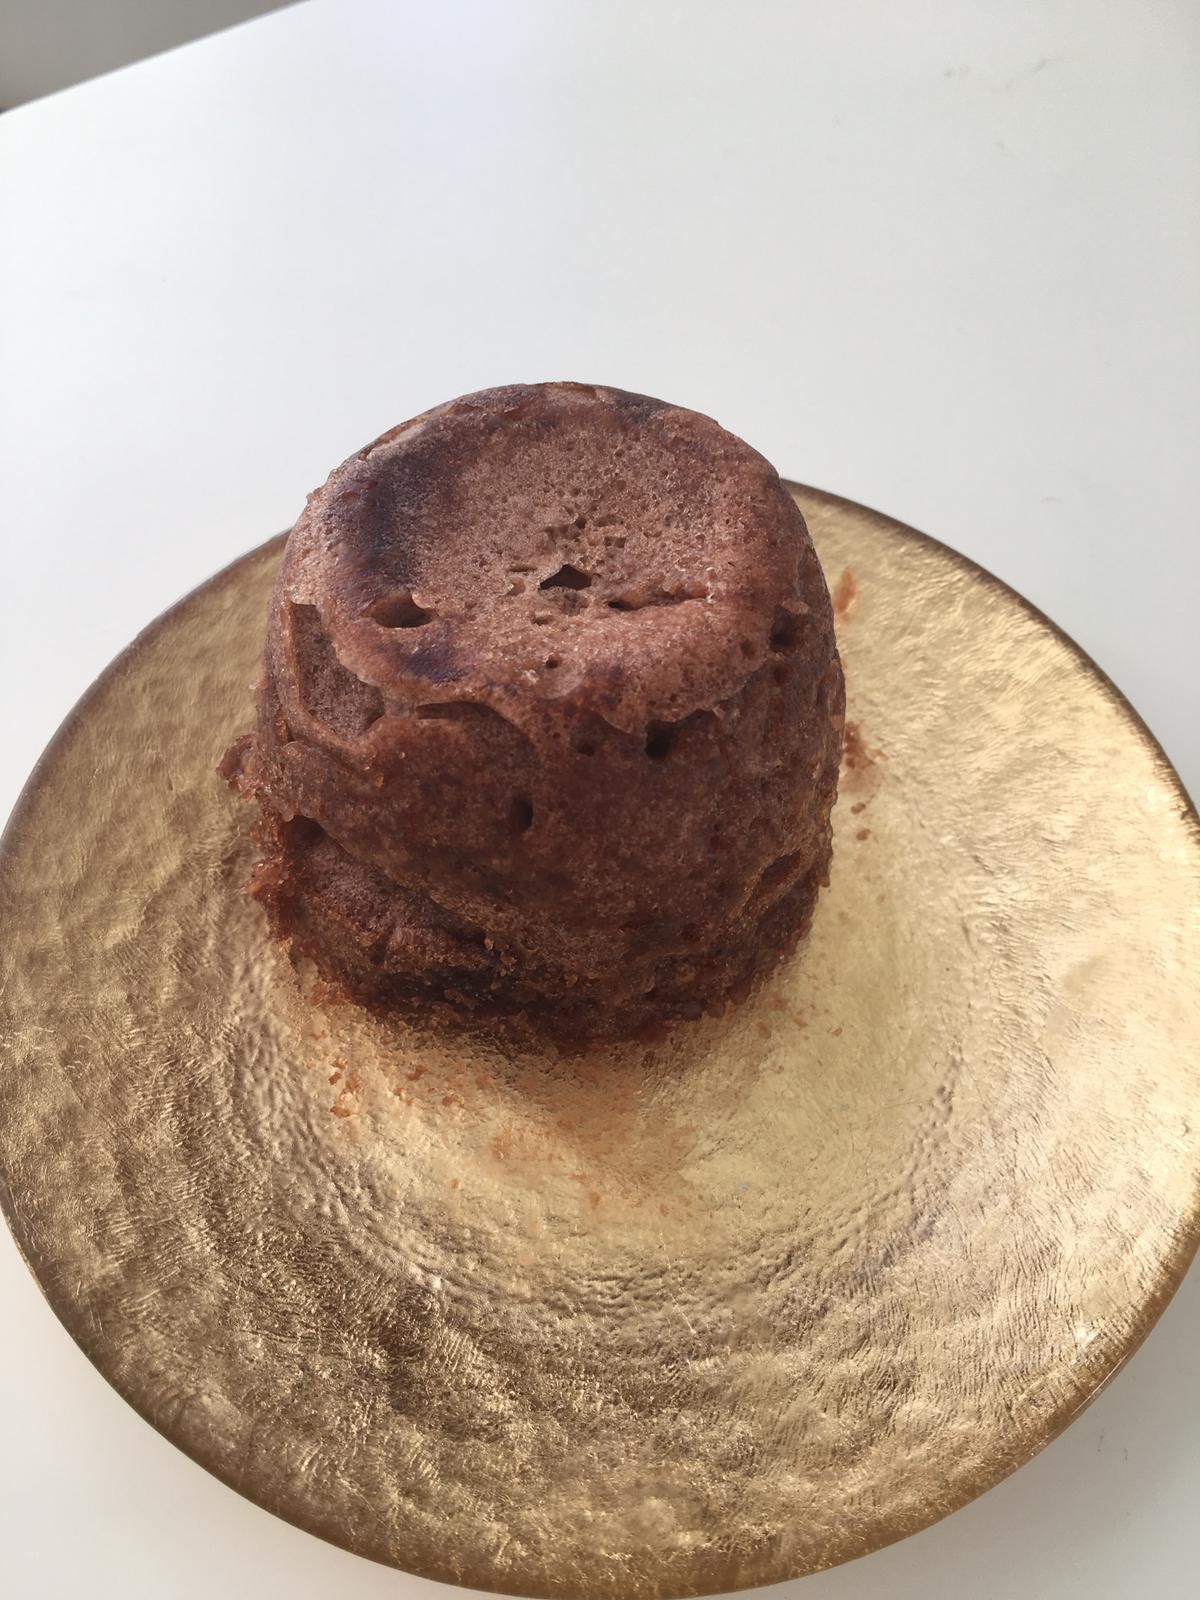 Low protein chocolate mug cake